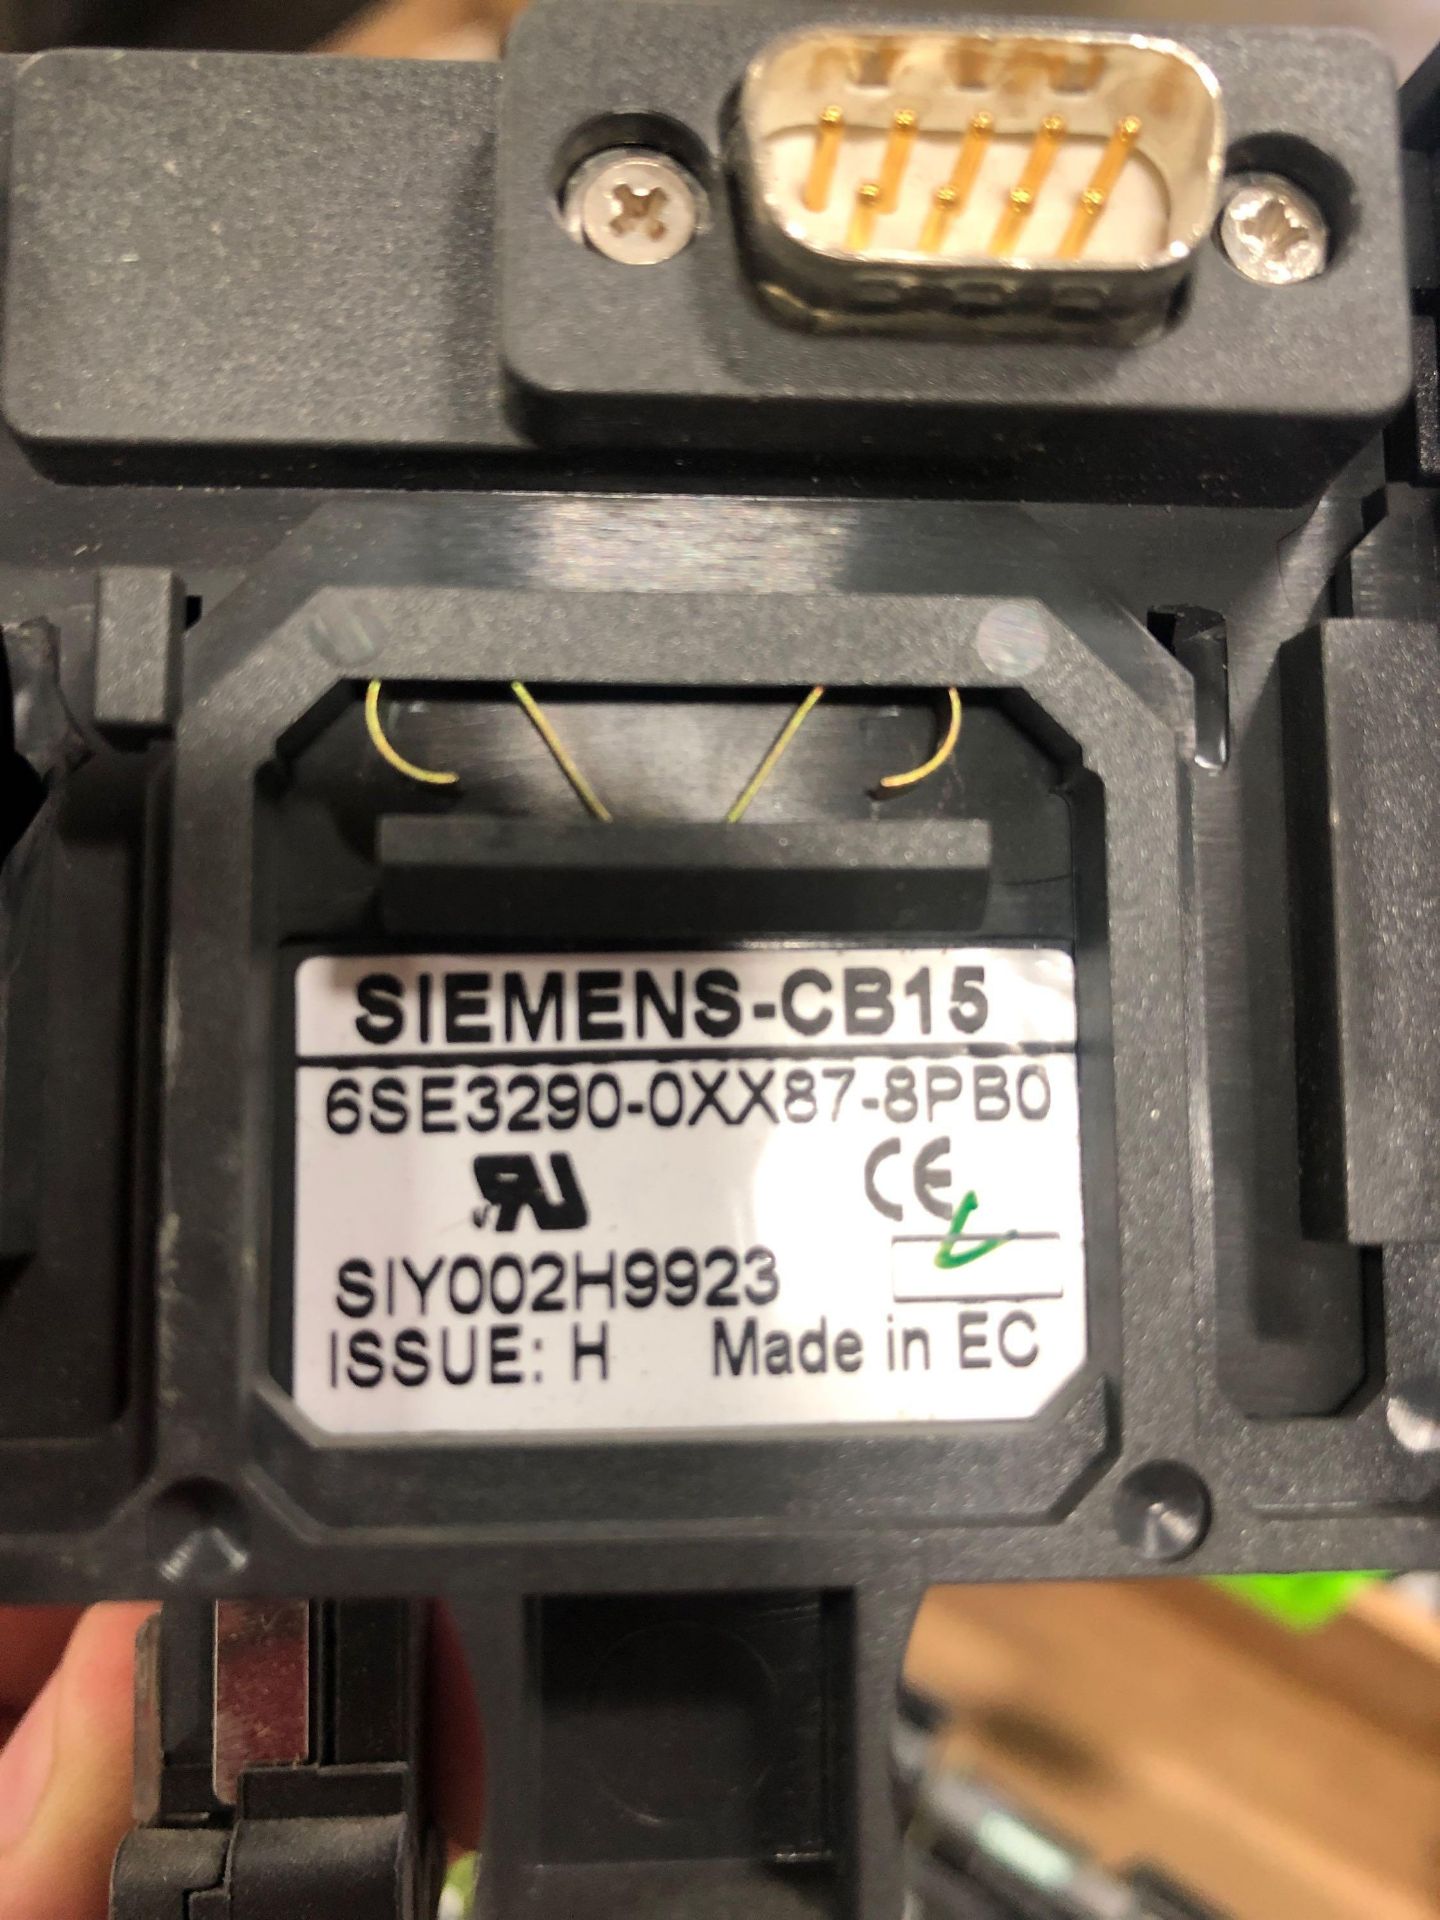 Qty 8 - Siemens model 6SE3290-0XX87-8PB0. - Image 2 of 2